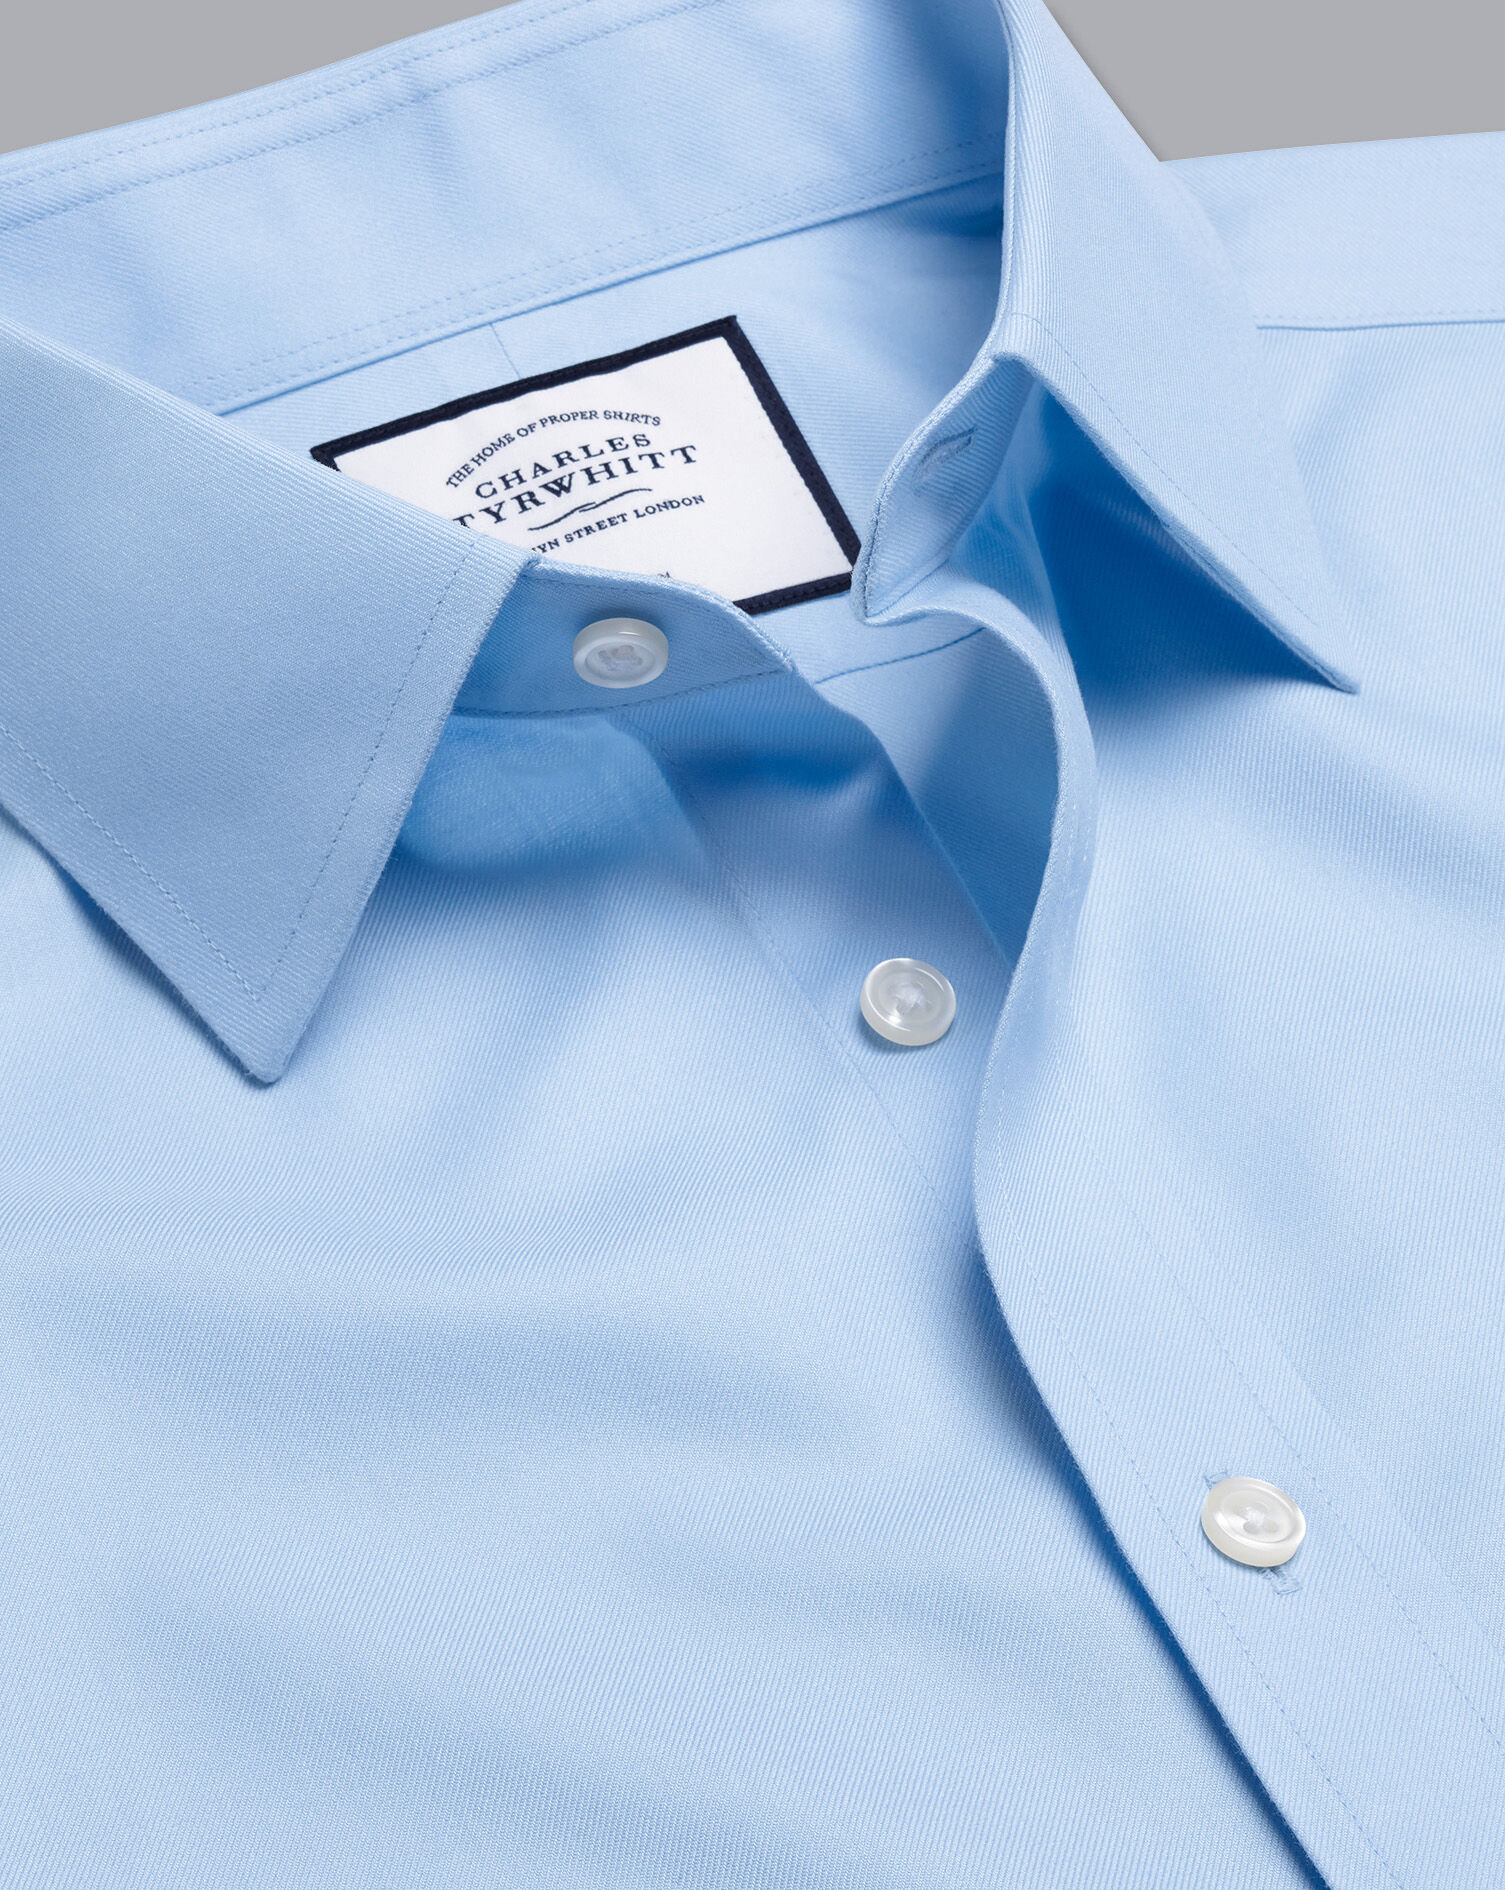 Charles Tyrwhitt Charles Tyrwhitt Mens Blue Check Polyester  Dress Shirt Size 16.5 Collared Butto 